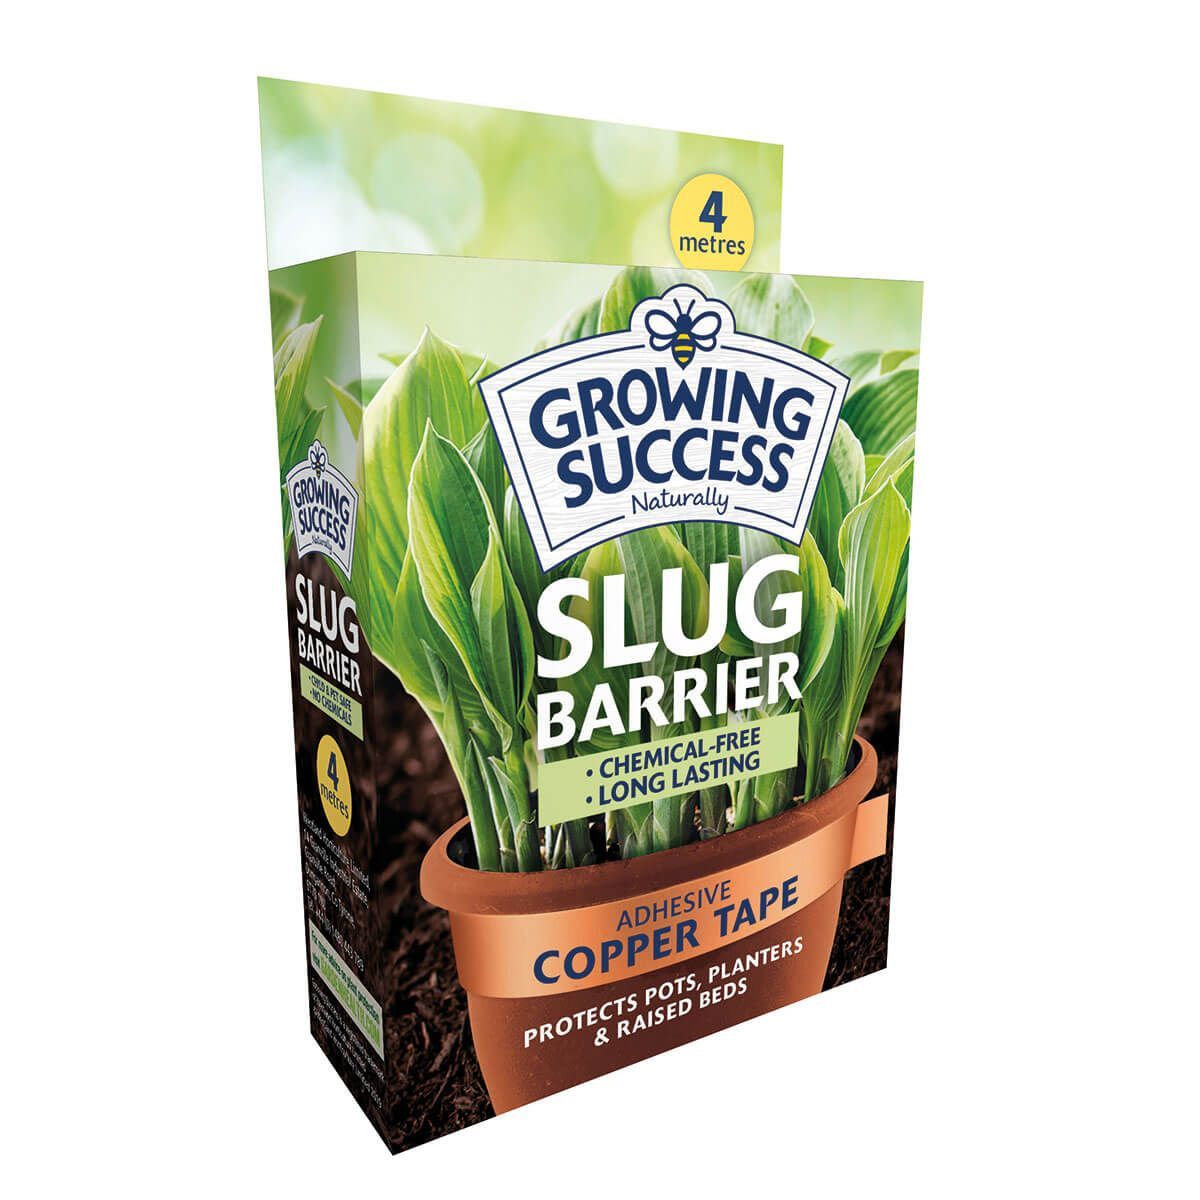 Growing Success Slug Barrier Copper Tape (4 Metres)